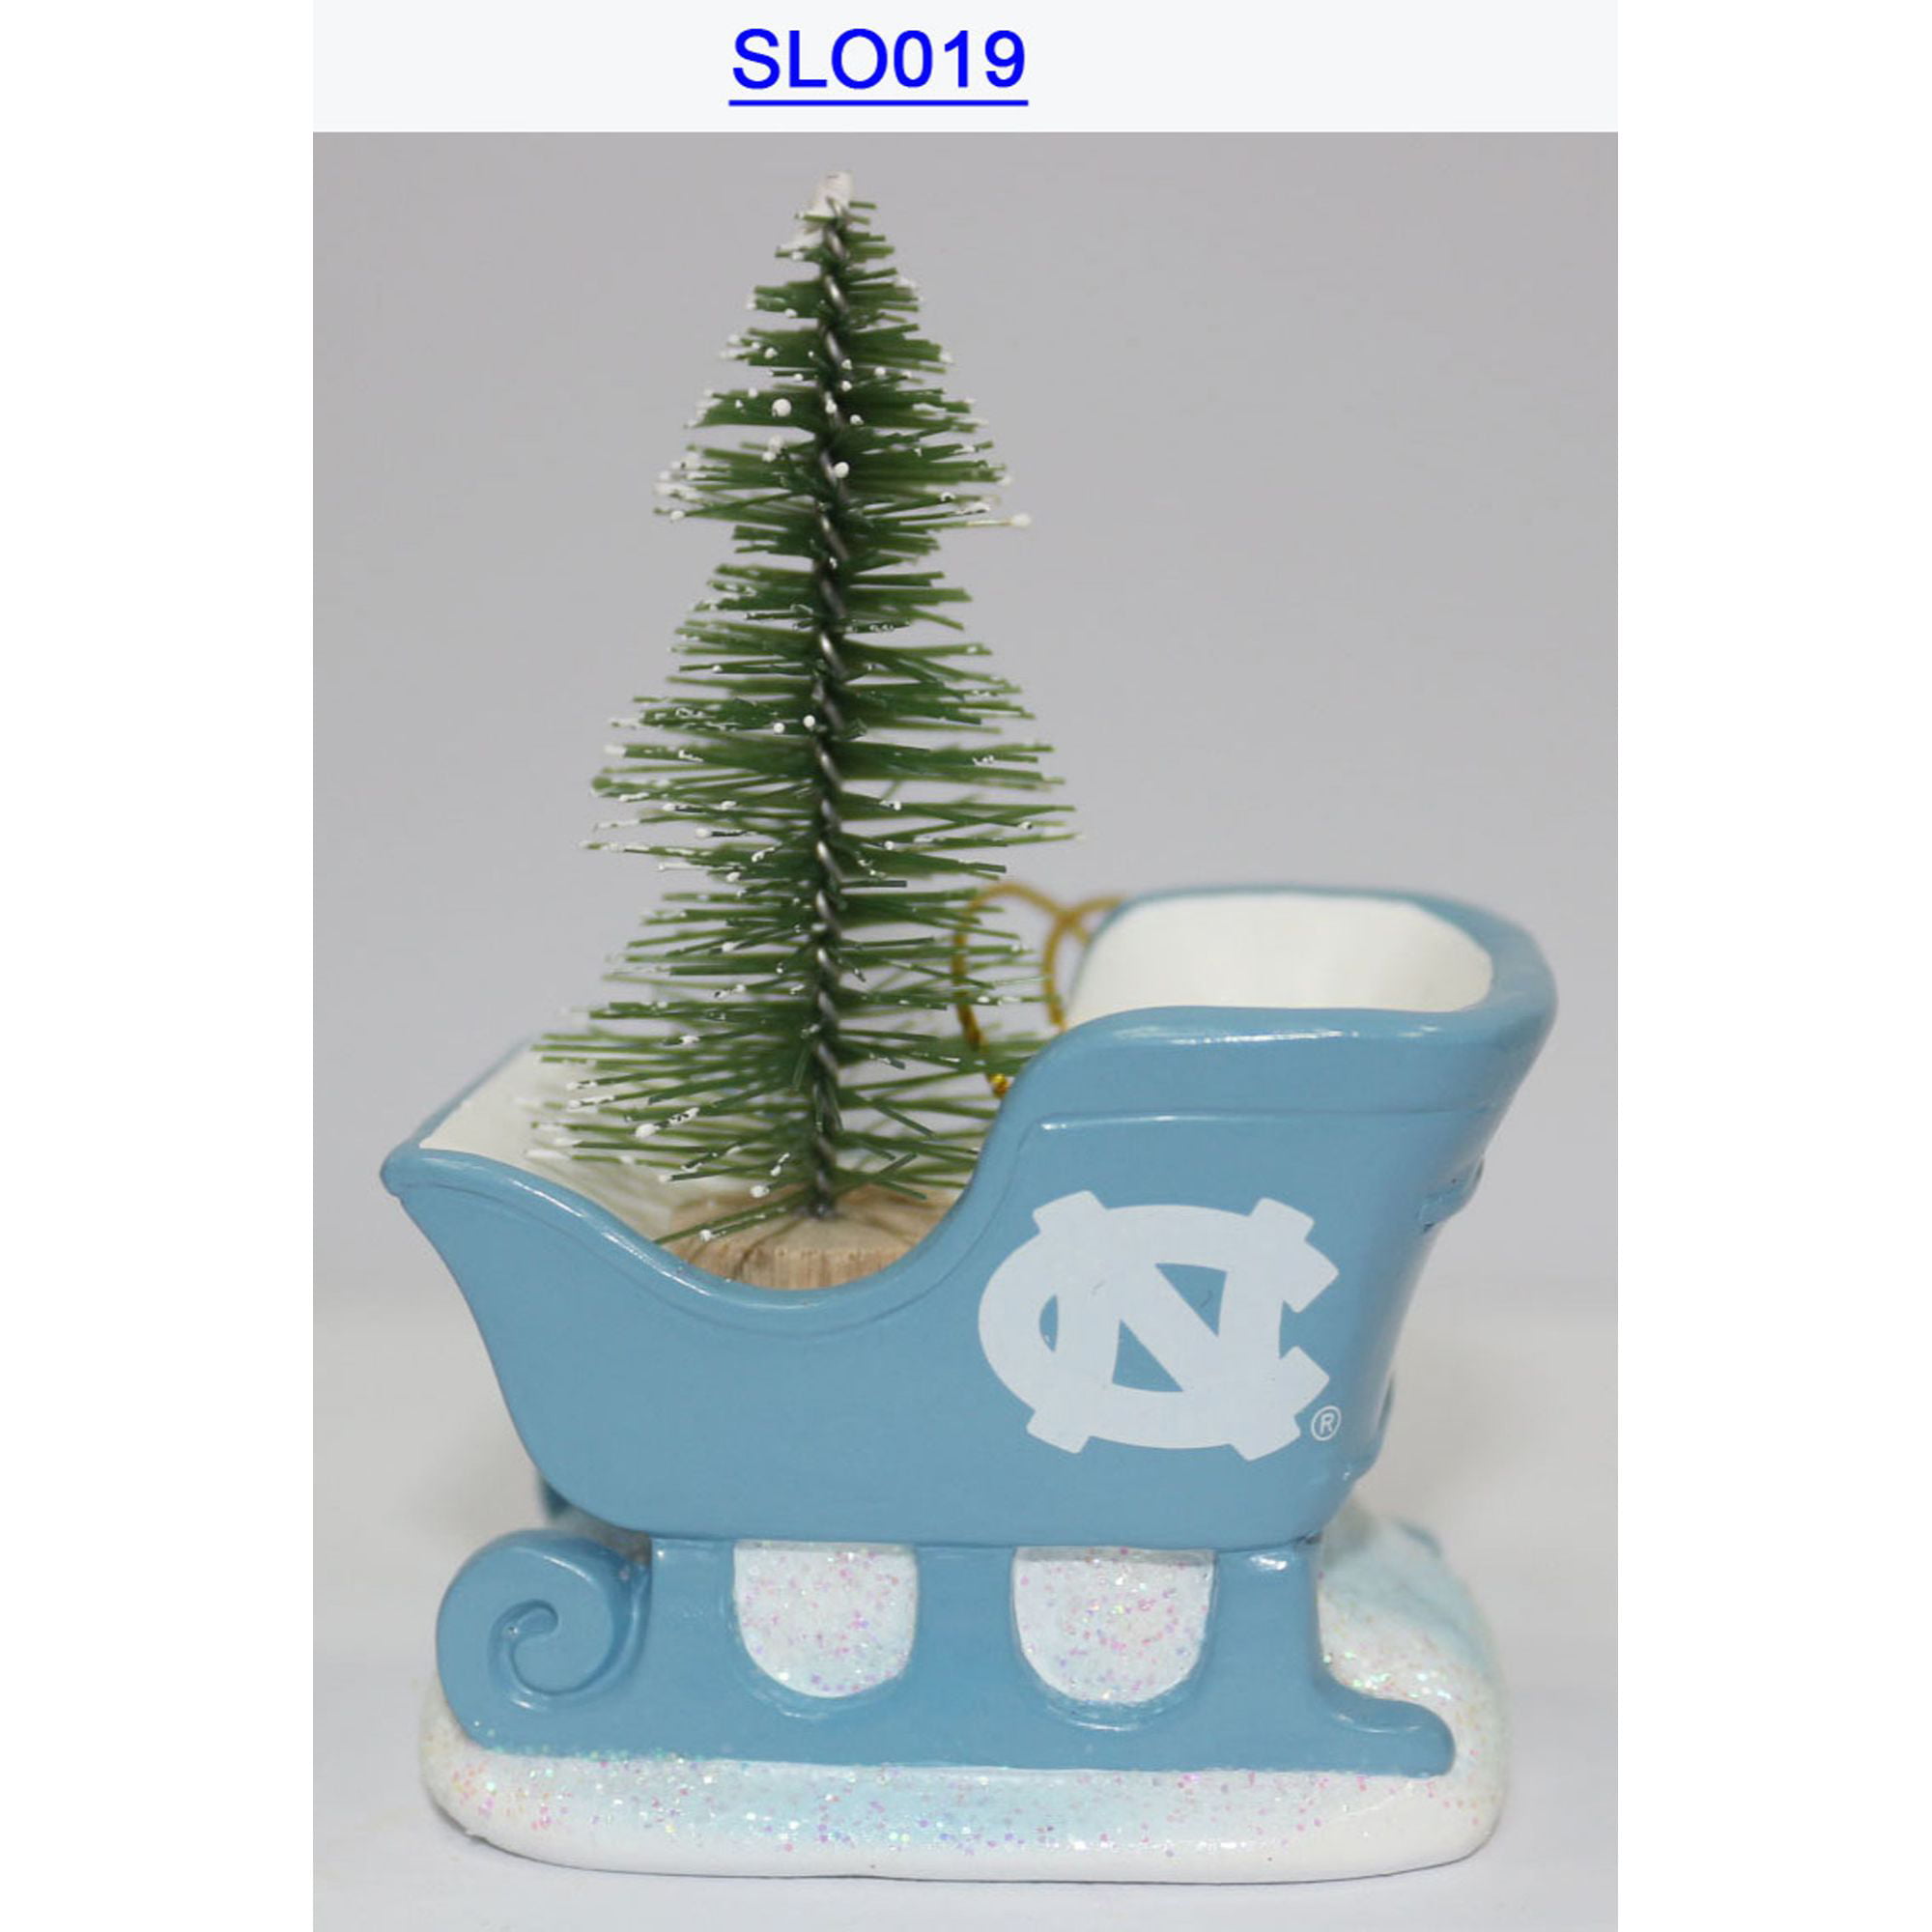 United features Snoopy dog bowl sledding ornament Xmas holiday tree